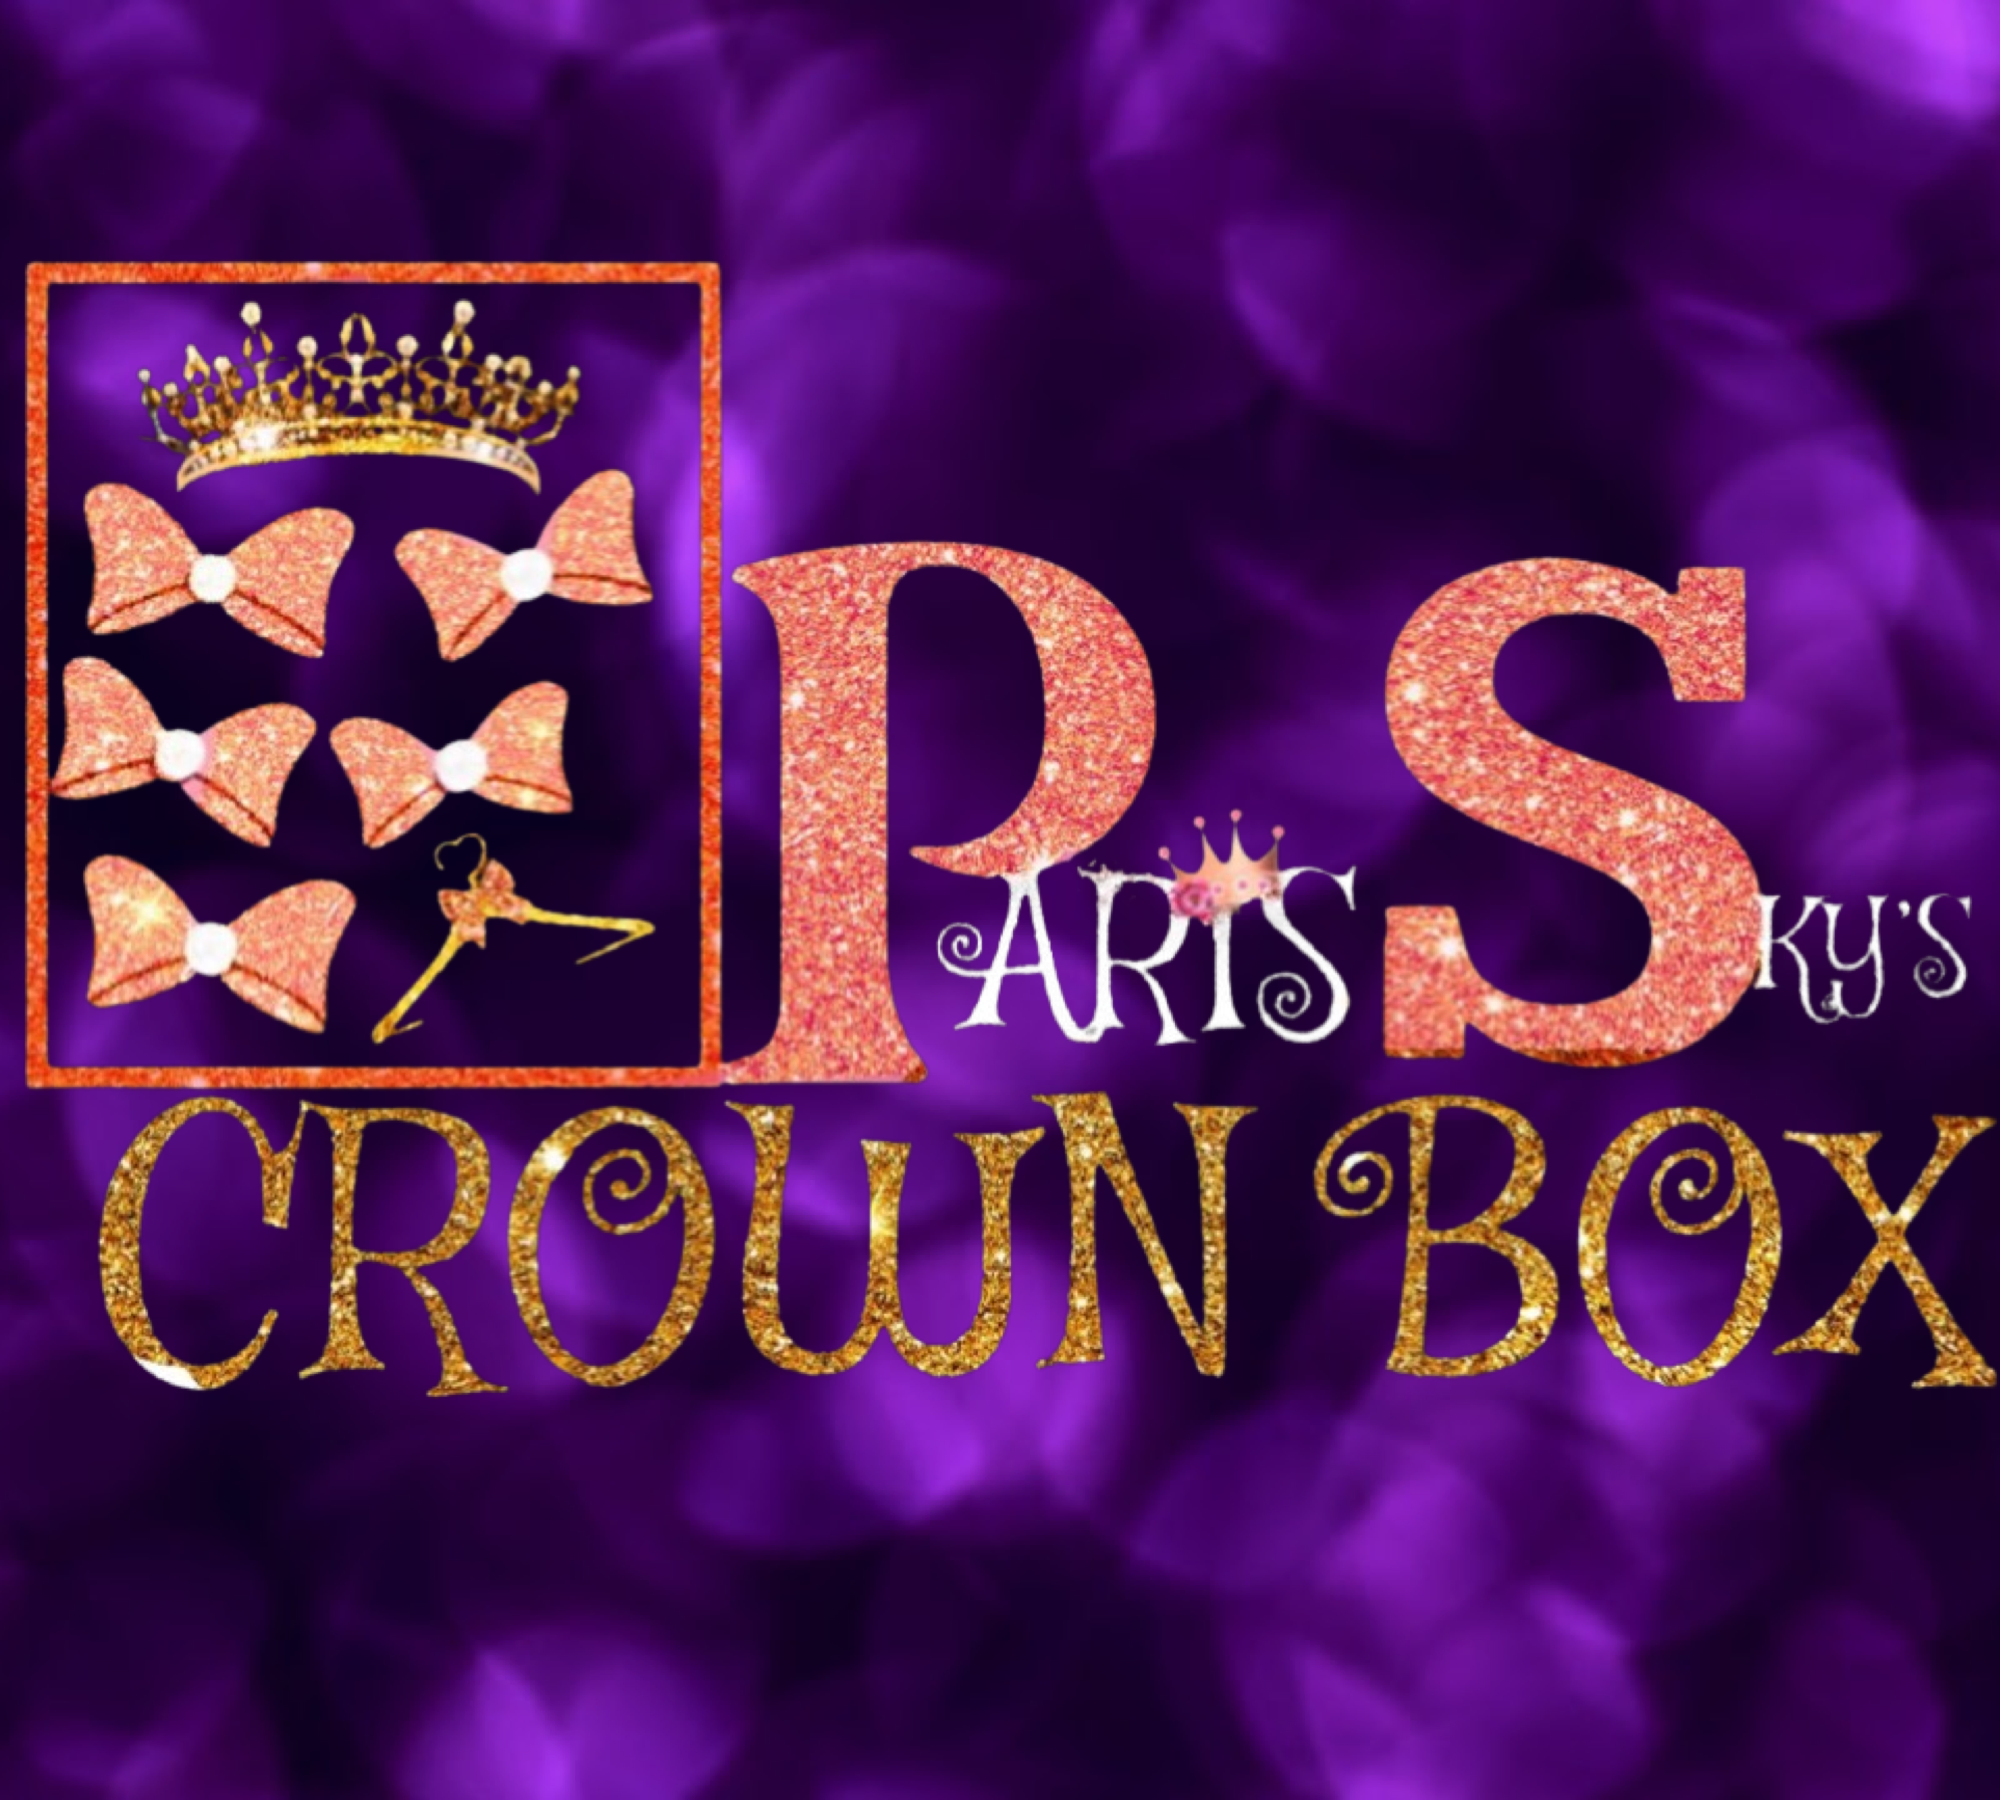 ParisSky’s Crown Box 